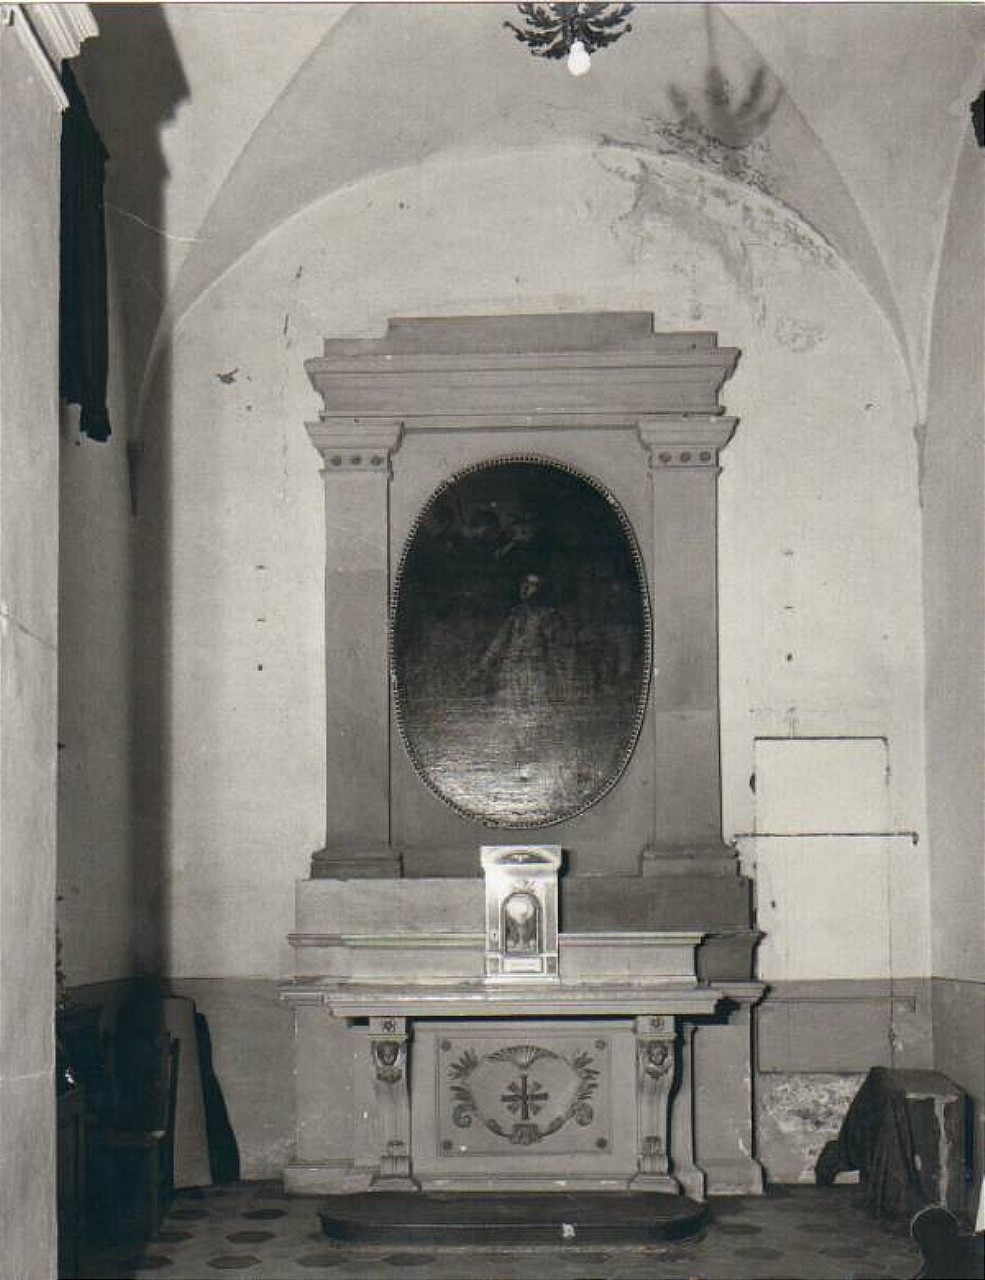 cherubini e motivi decorativi fitomorfi (altare) - bottega toscana (secc. XVIII/ XIX)